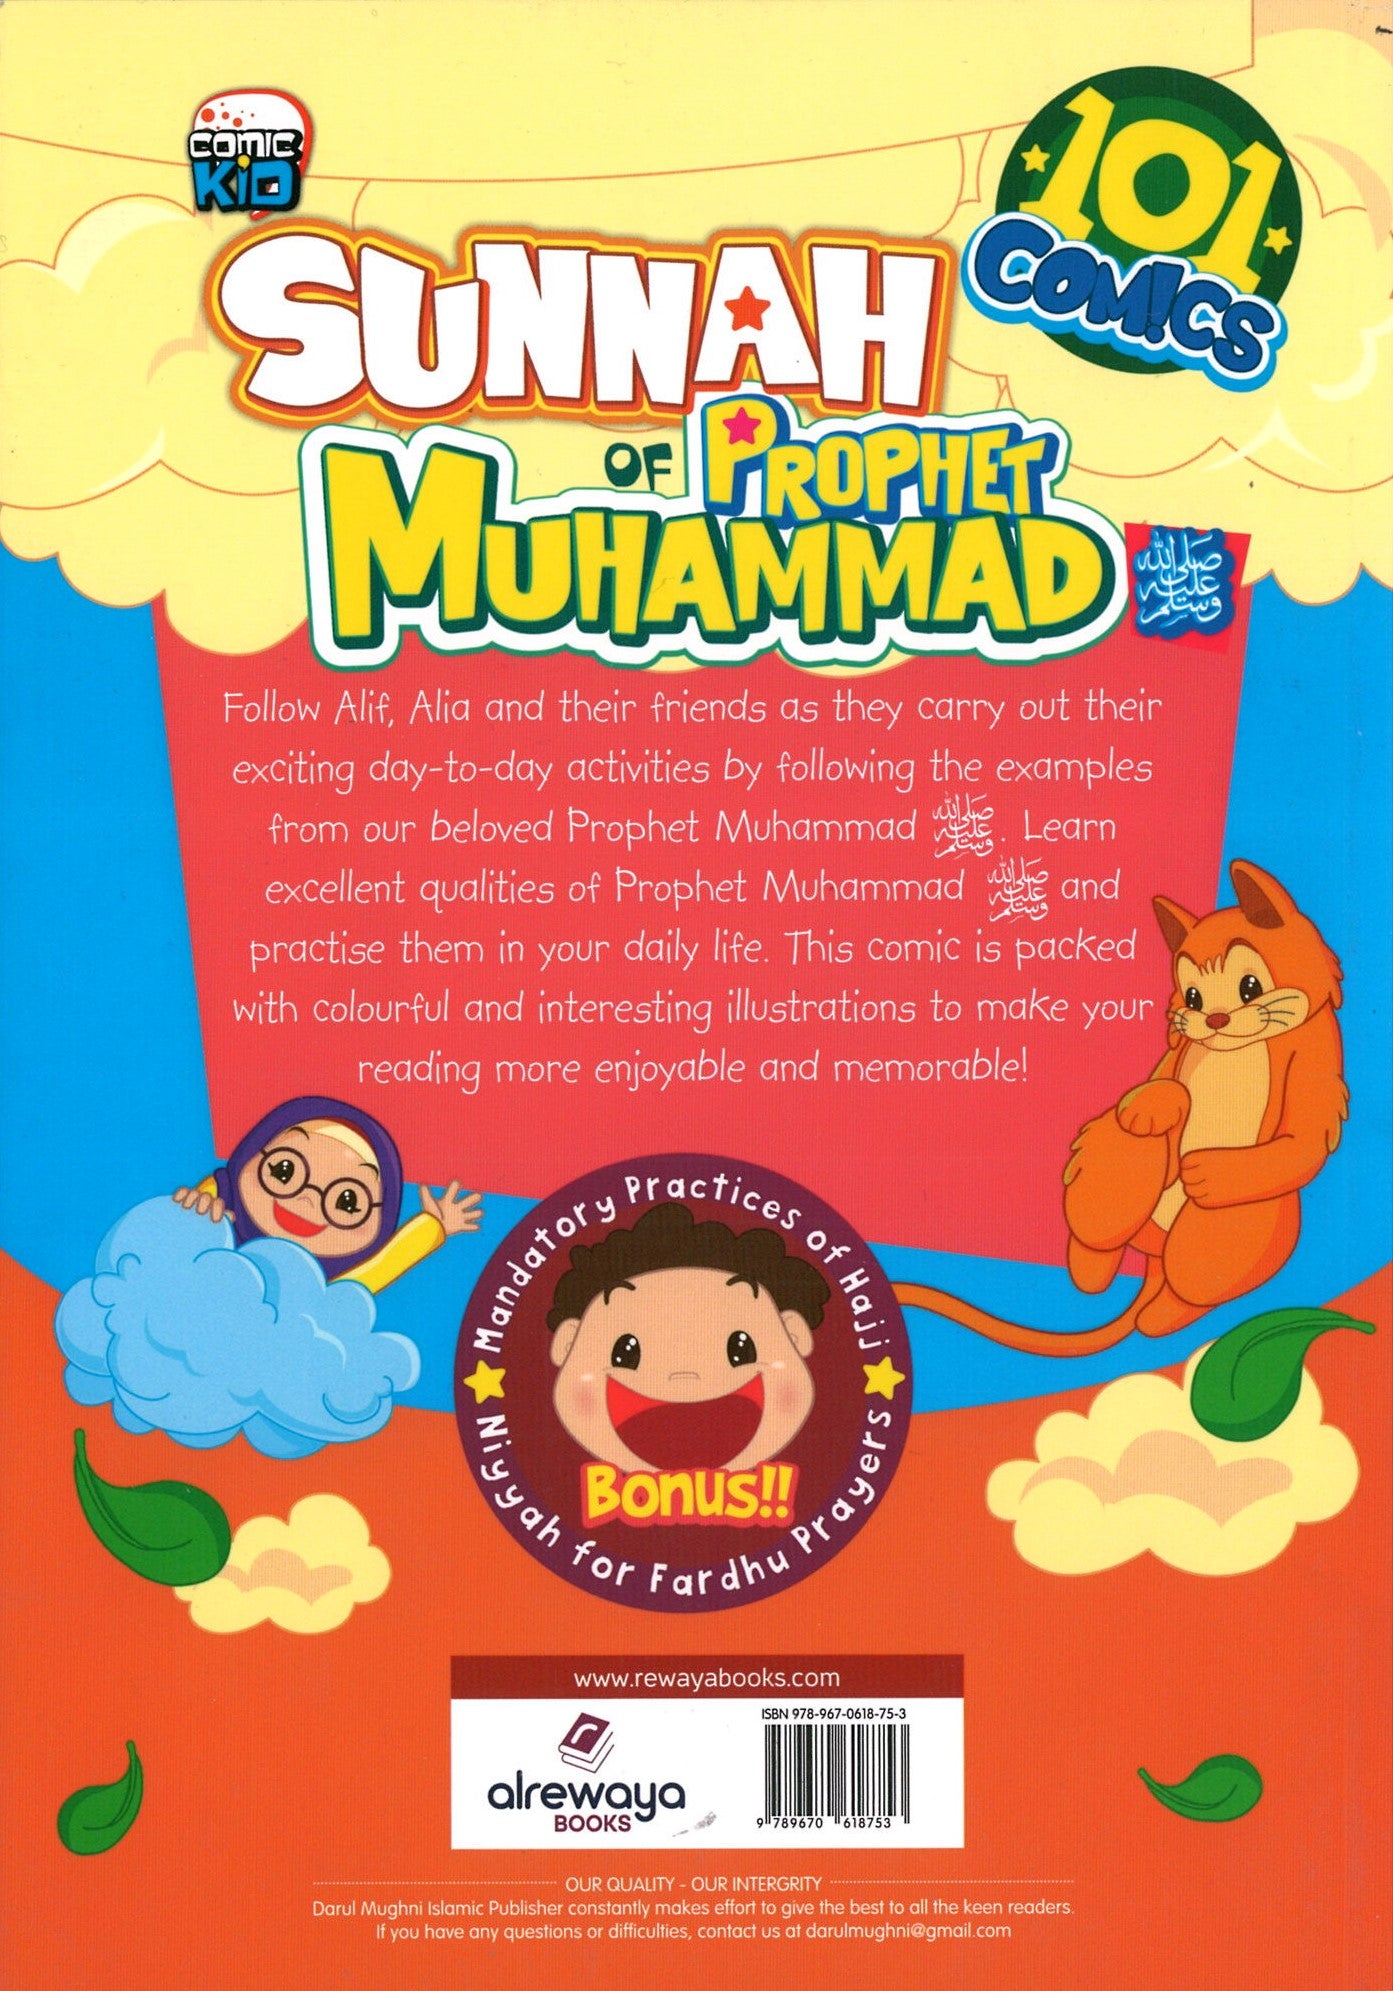 Sunnah of Prophet Muhammad - 101 Comics